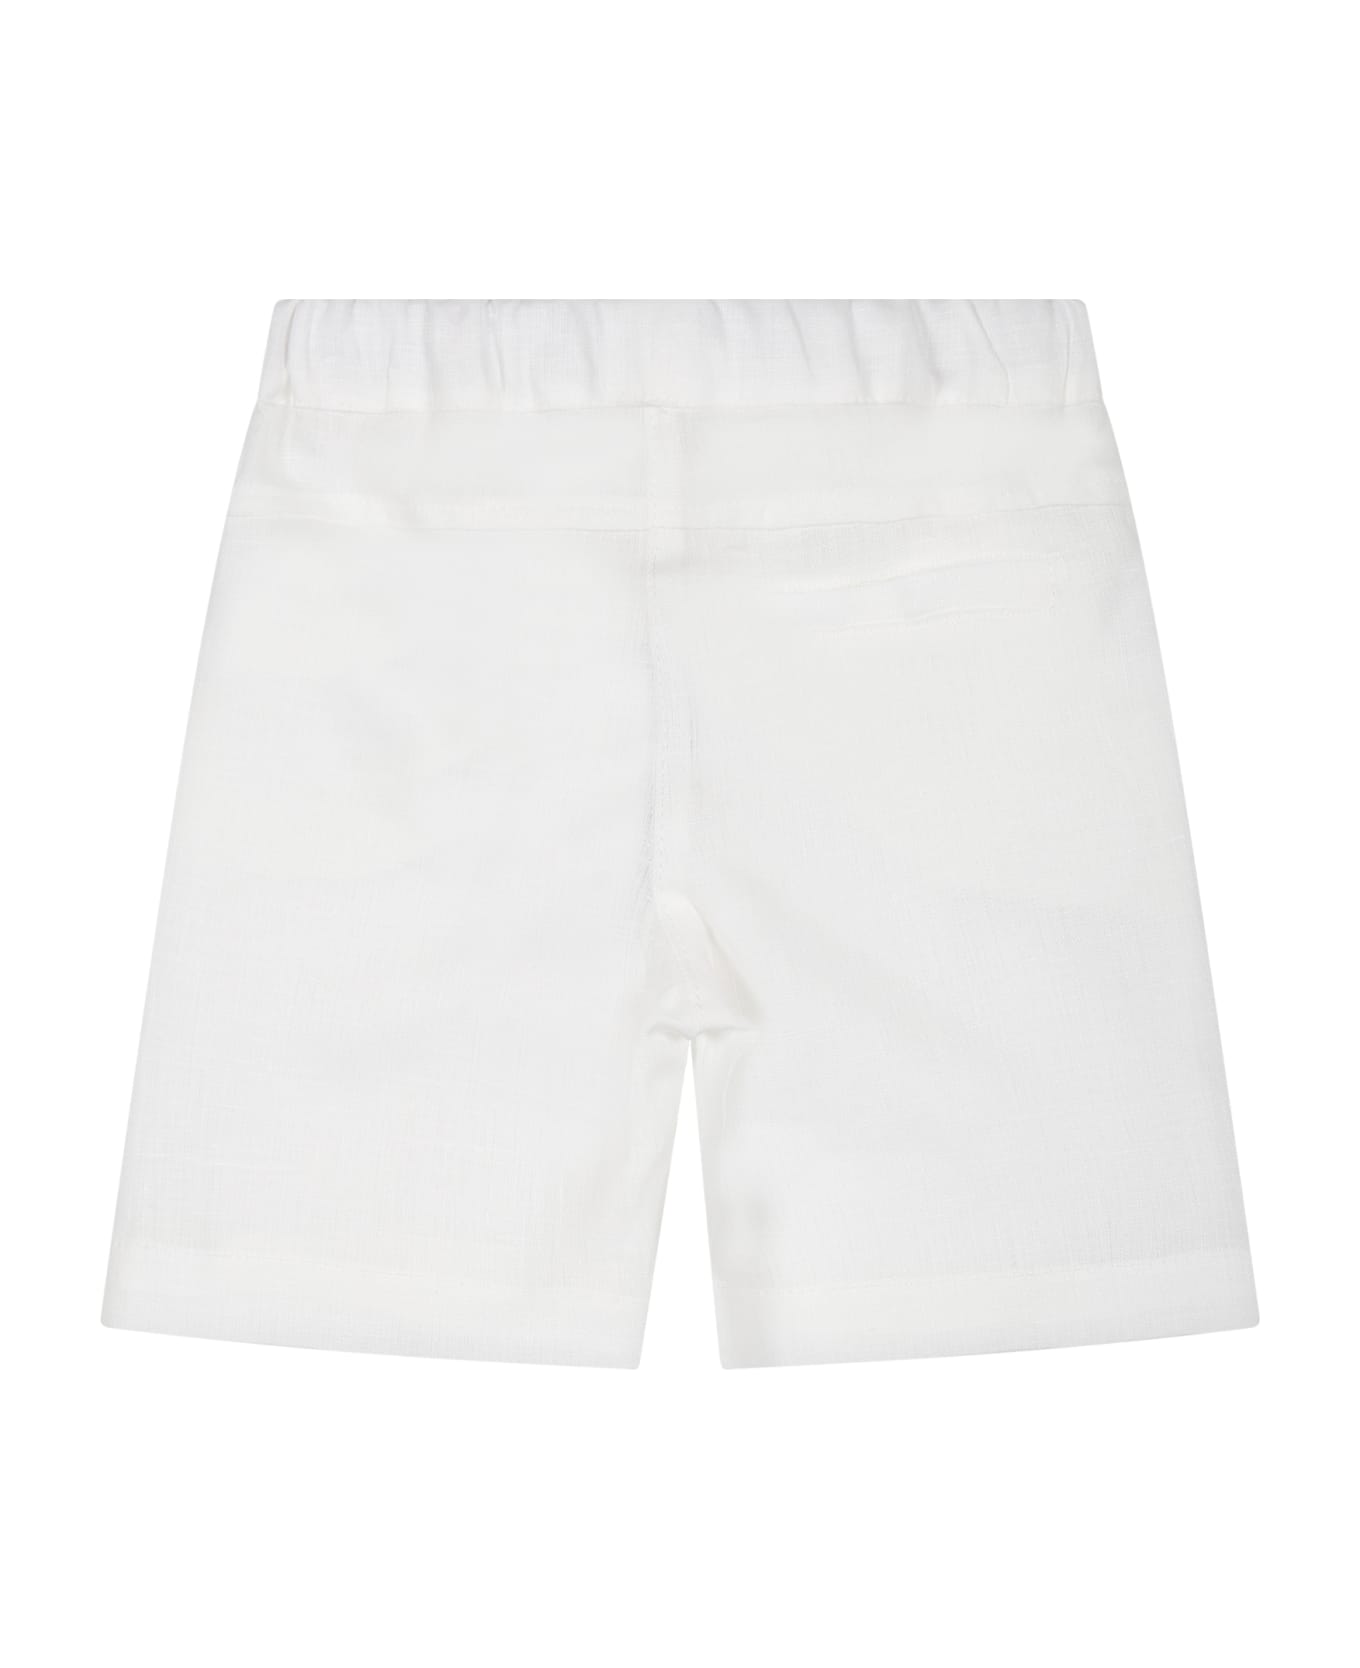 Little Bear White Shorts For Baby Boy - White ボトムス